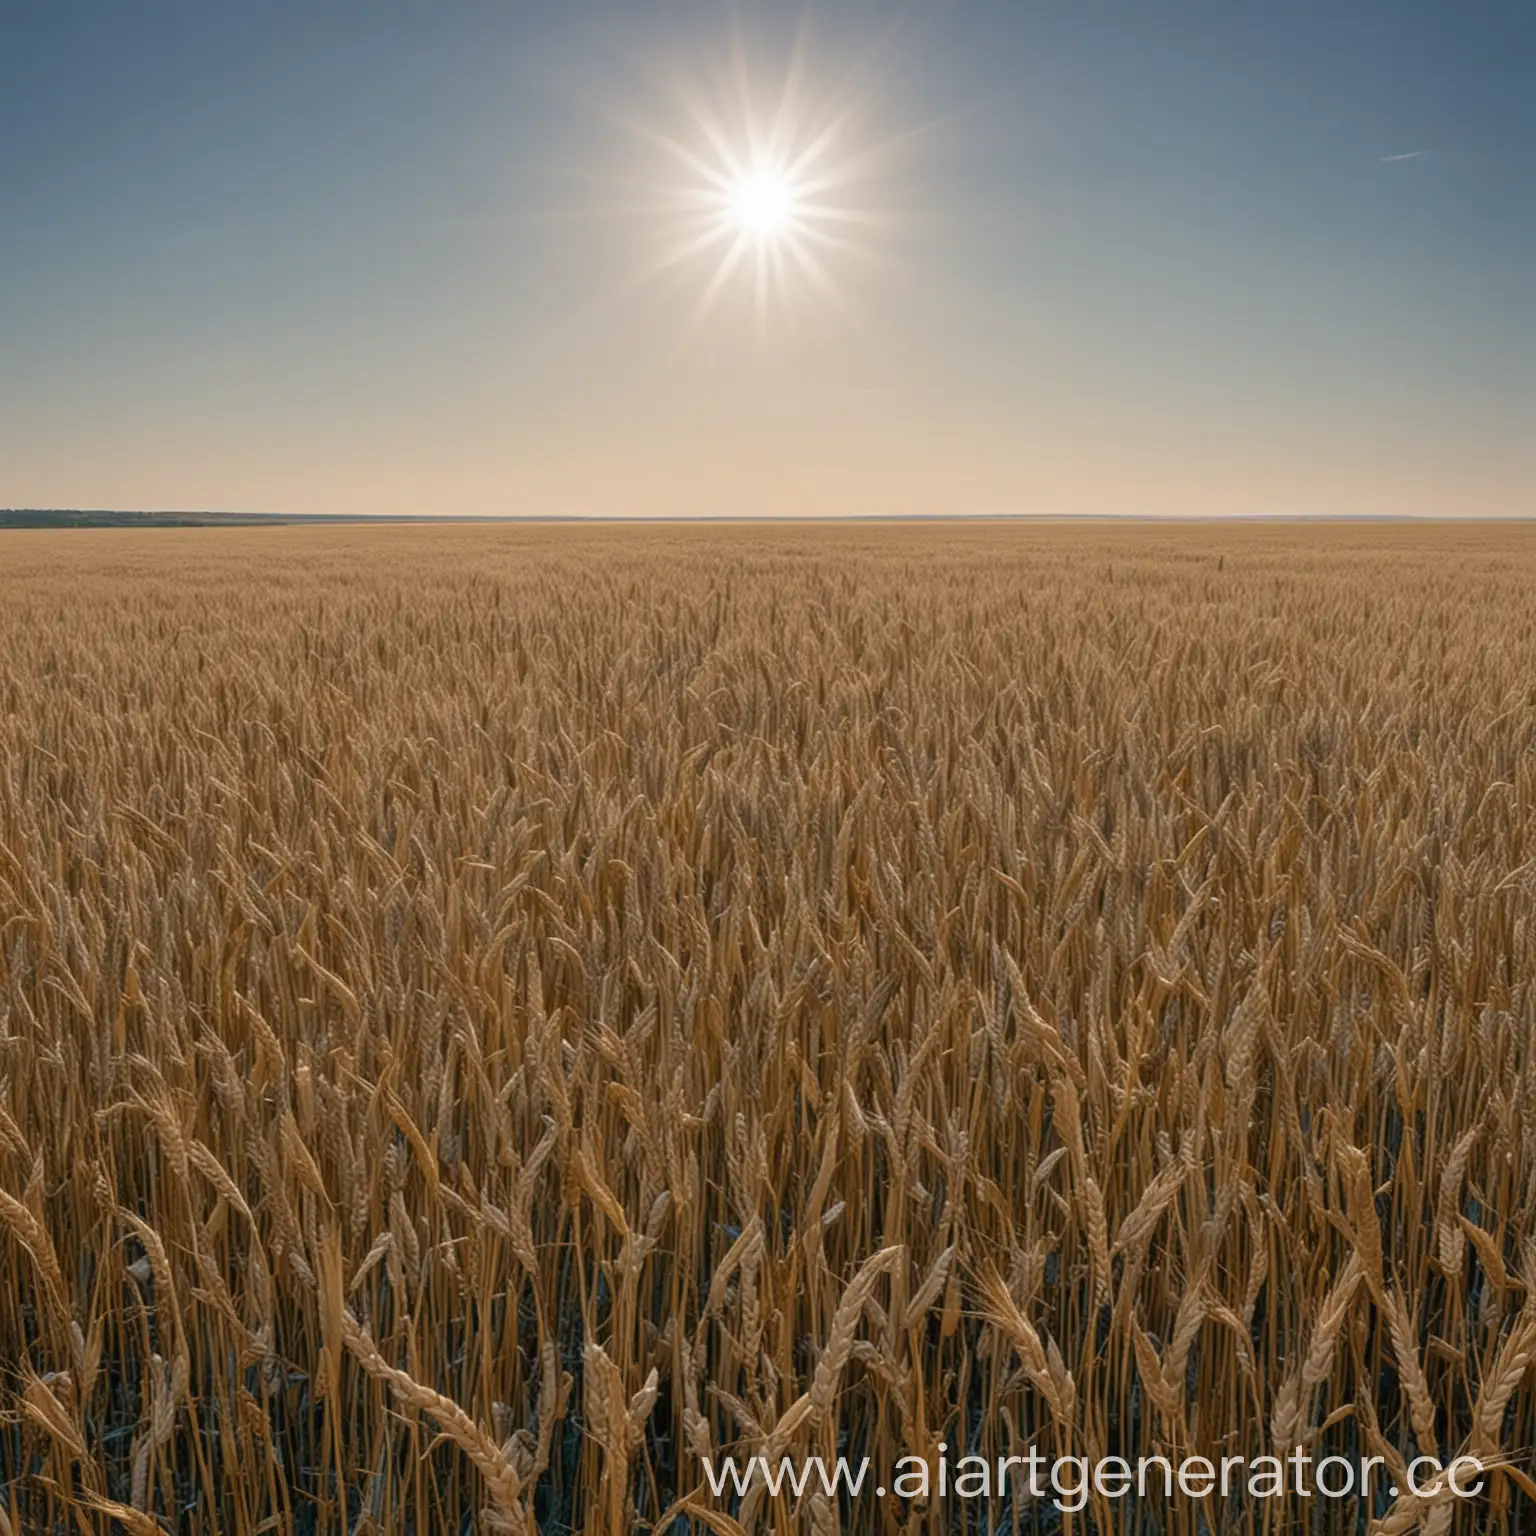 Endless fields of wheat, horizon not visible, blue sky, sun shining